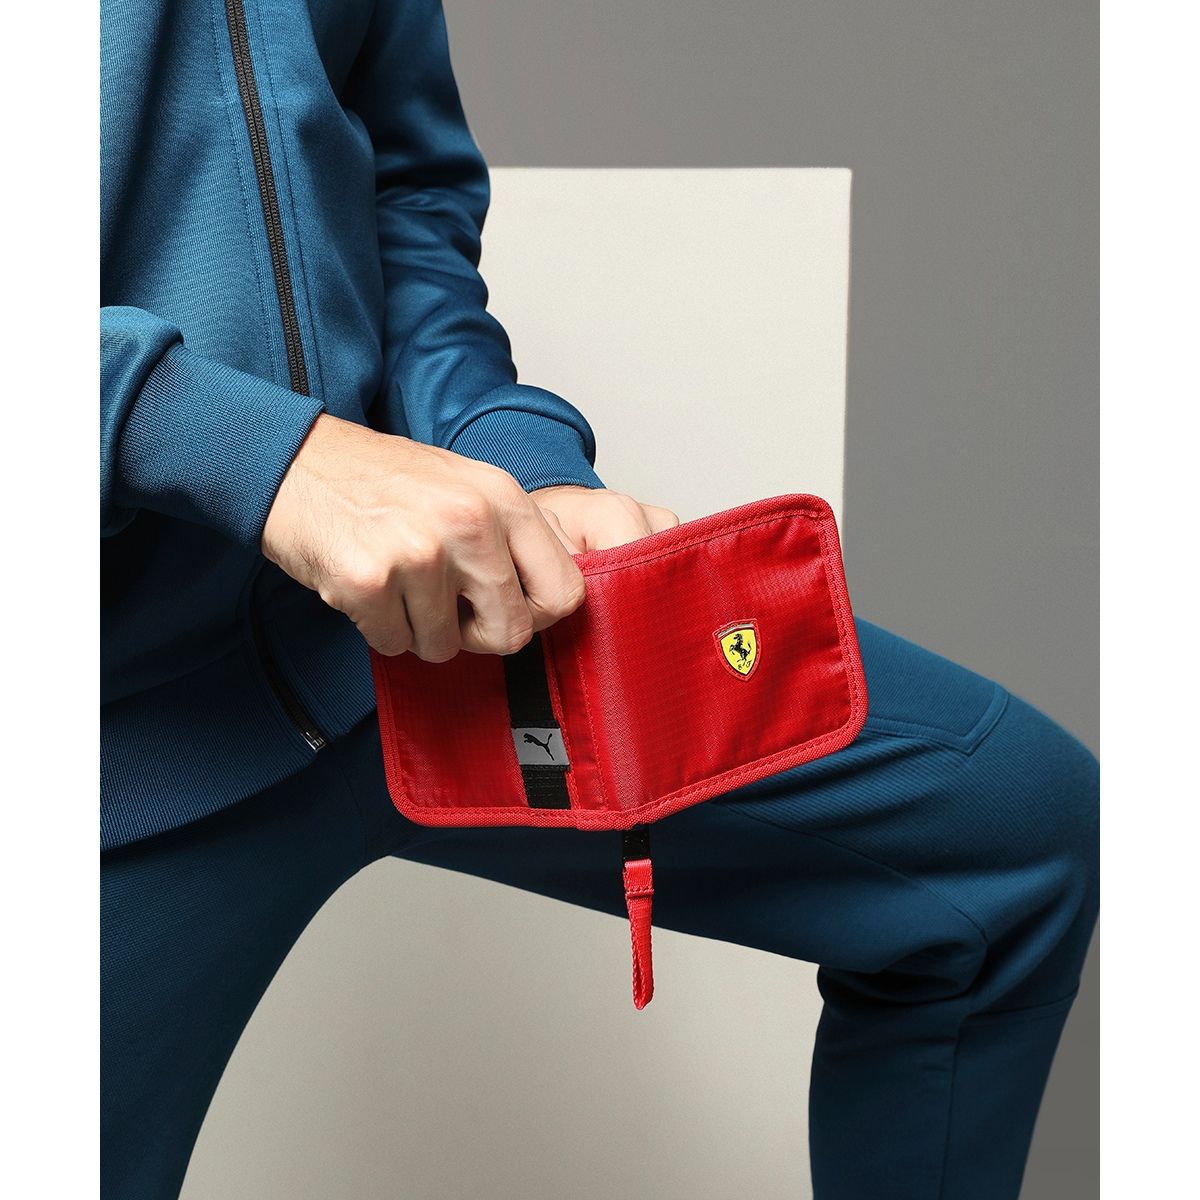 Scuderia Ferrari Race Portable Bag by Puma